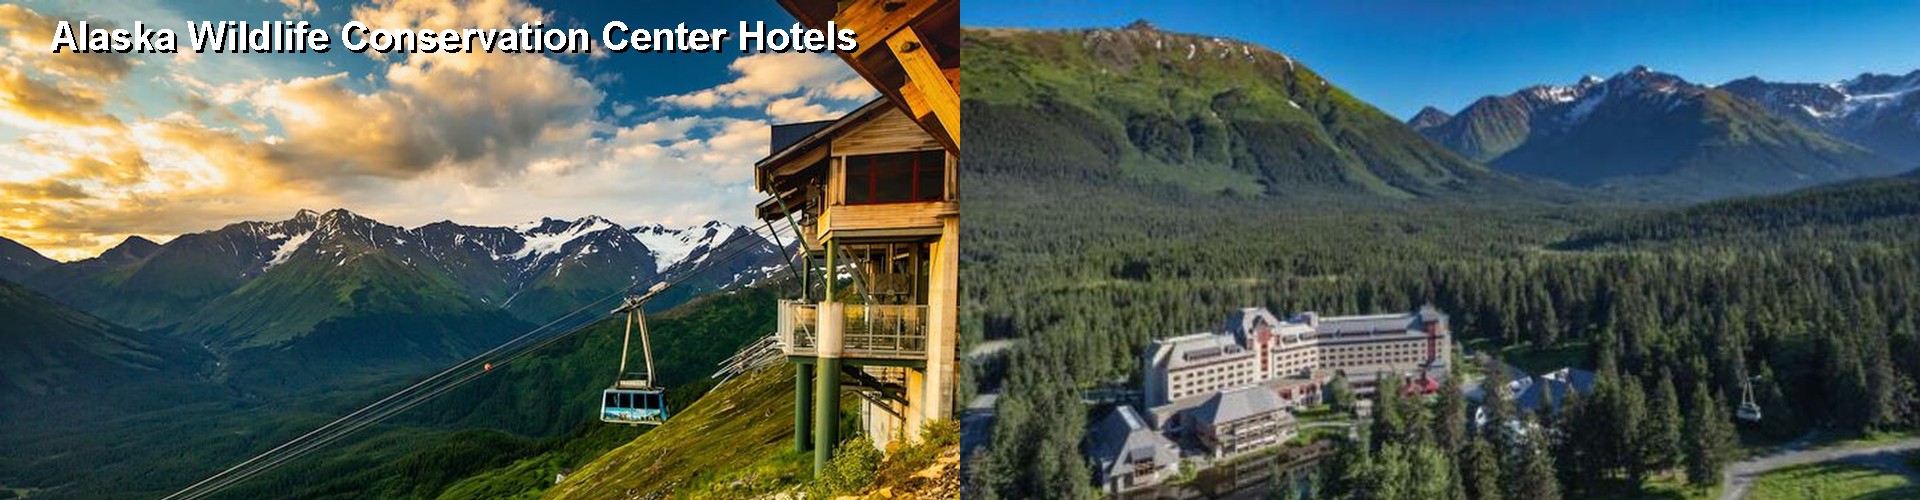 5 Best Hotels near Alaska Wildlife Conservation Center